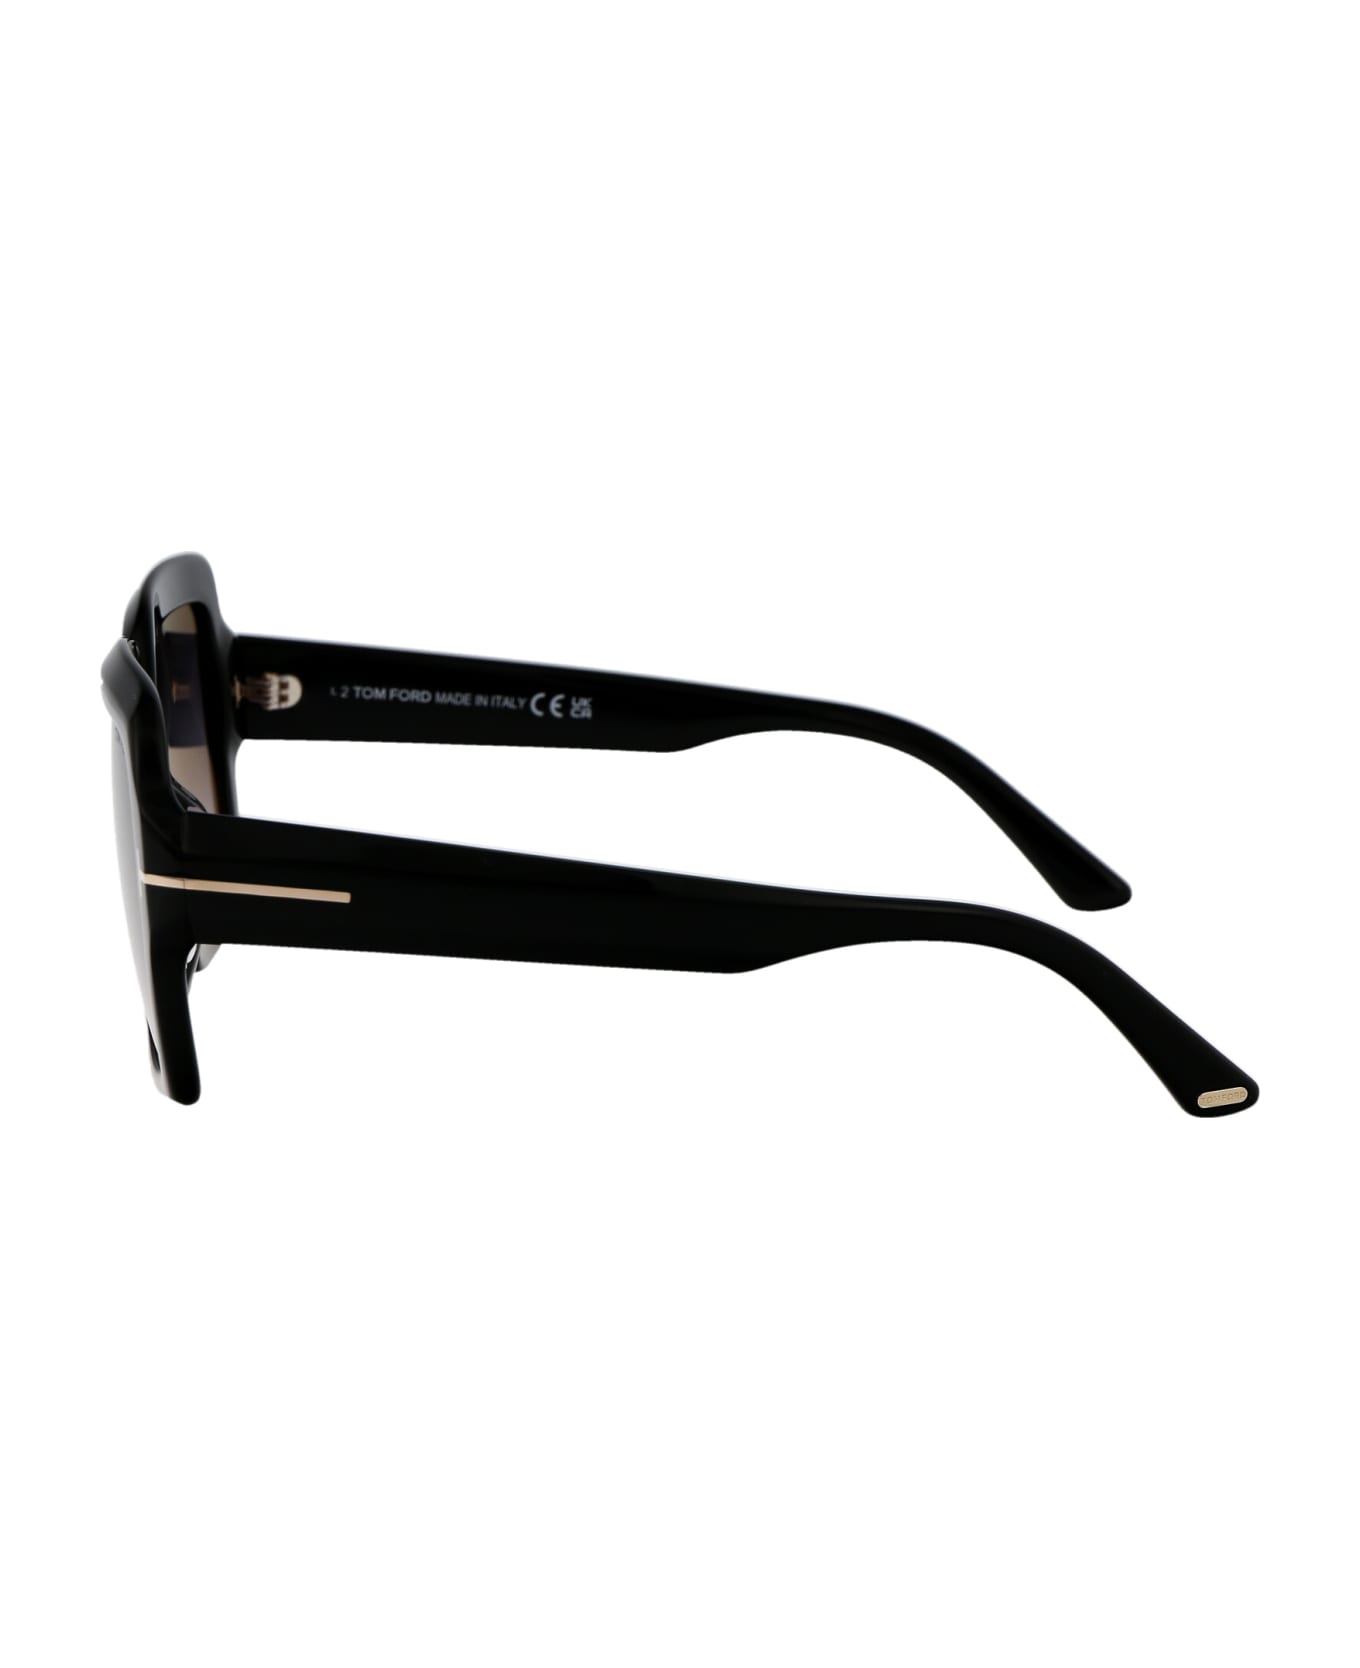 Tom Ford Eyewear Kaya Sunglasses - 01B Nero Lucido / Fumo Grad